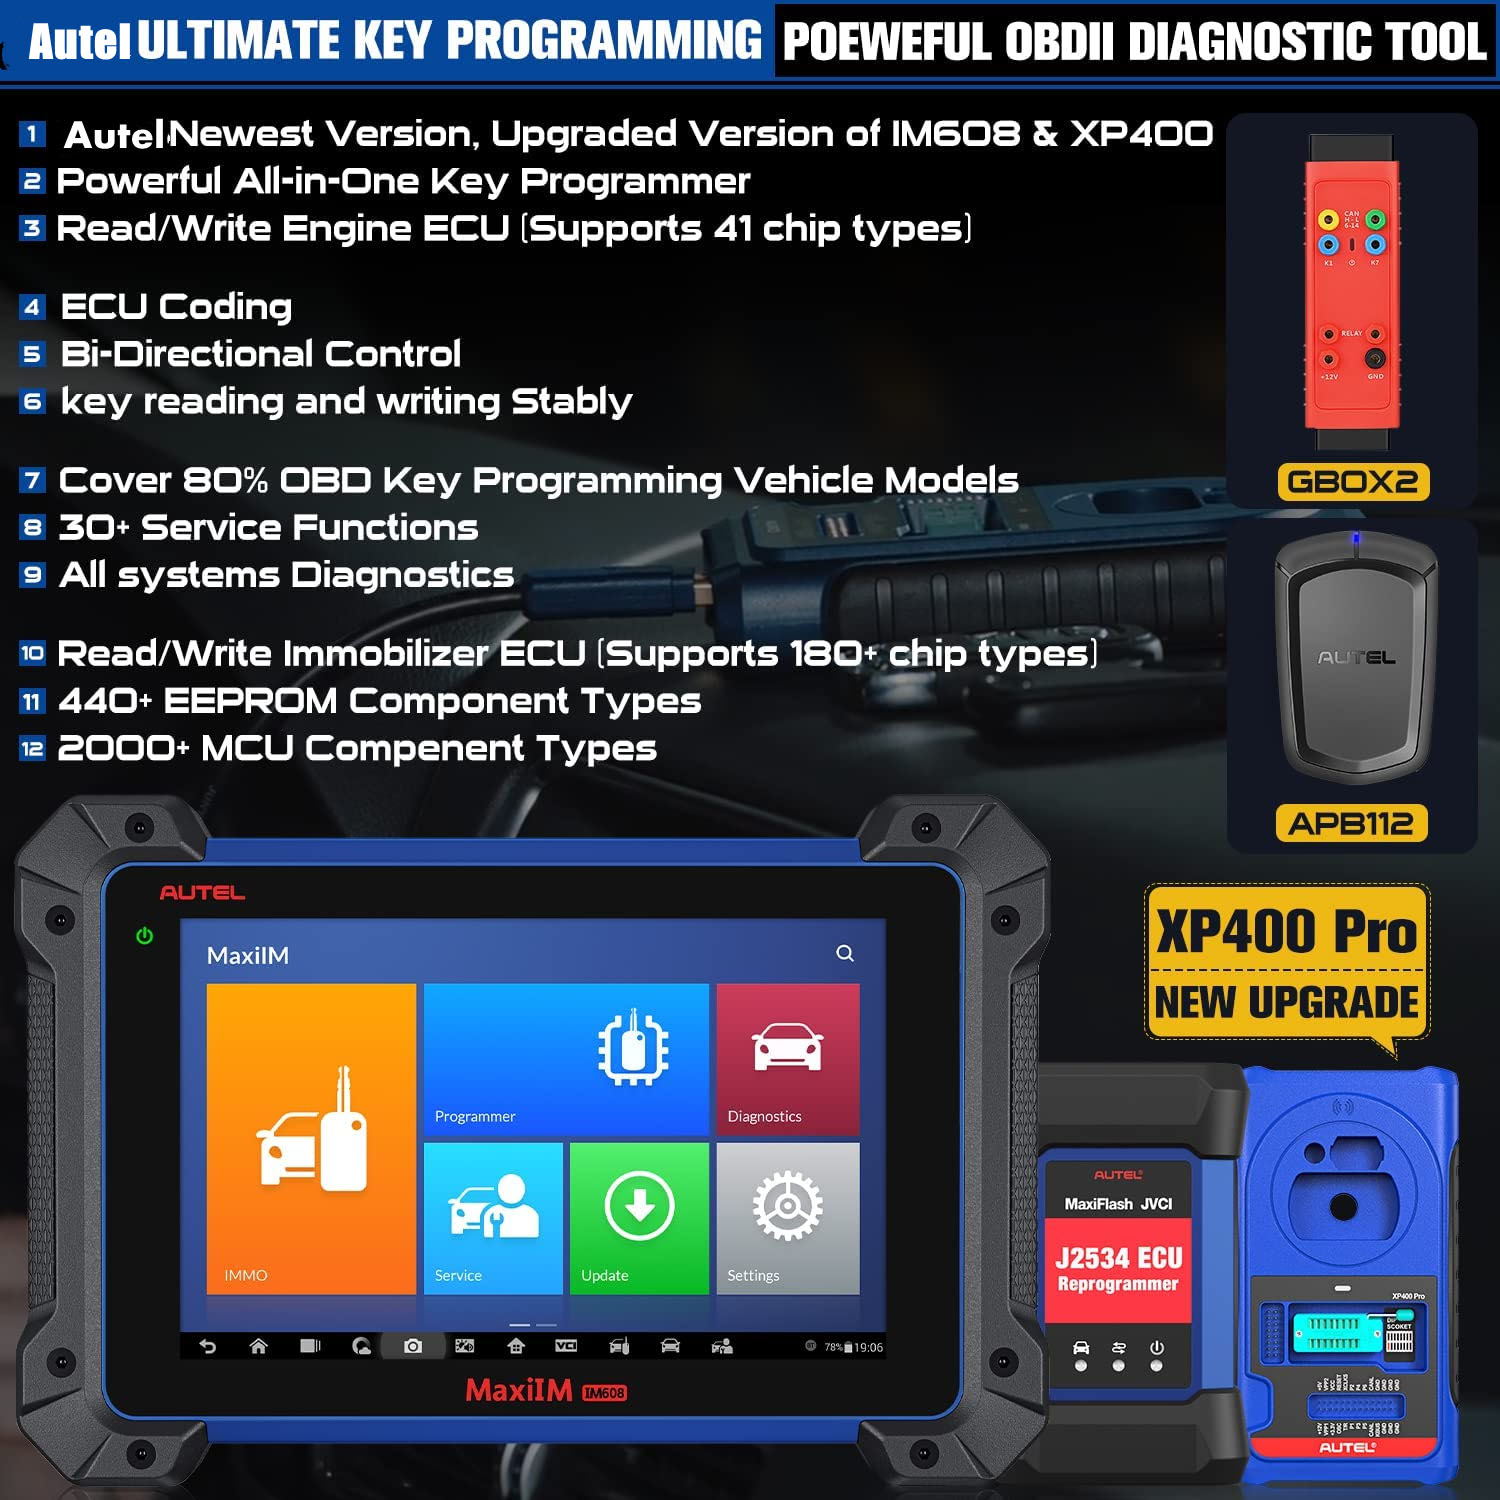 Autel IM608PRO With IMKPA Accessories Kit, G-Box2 and APB112